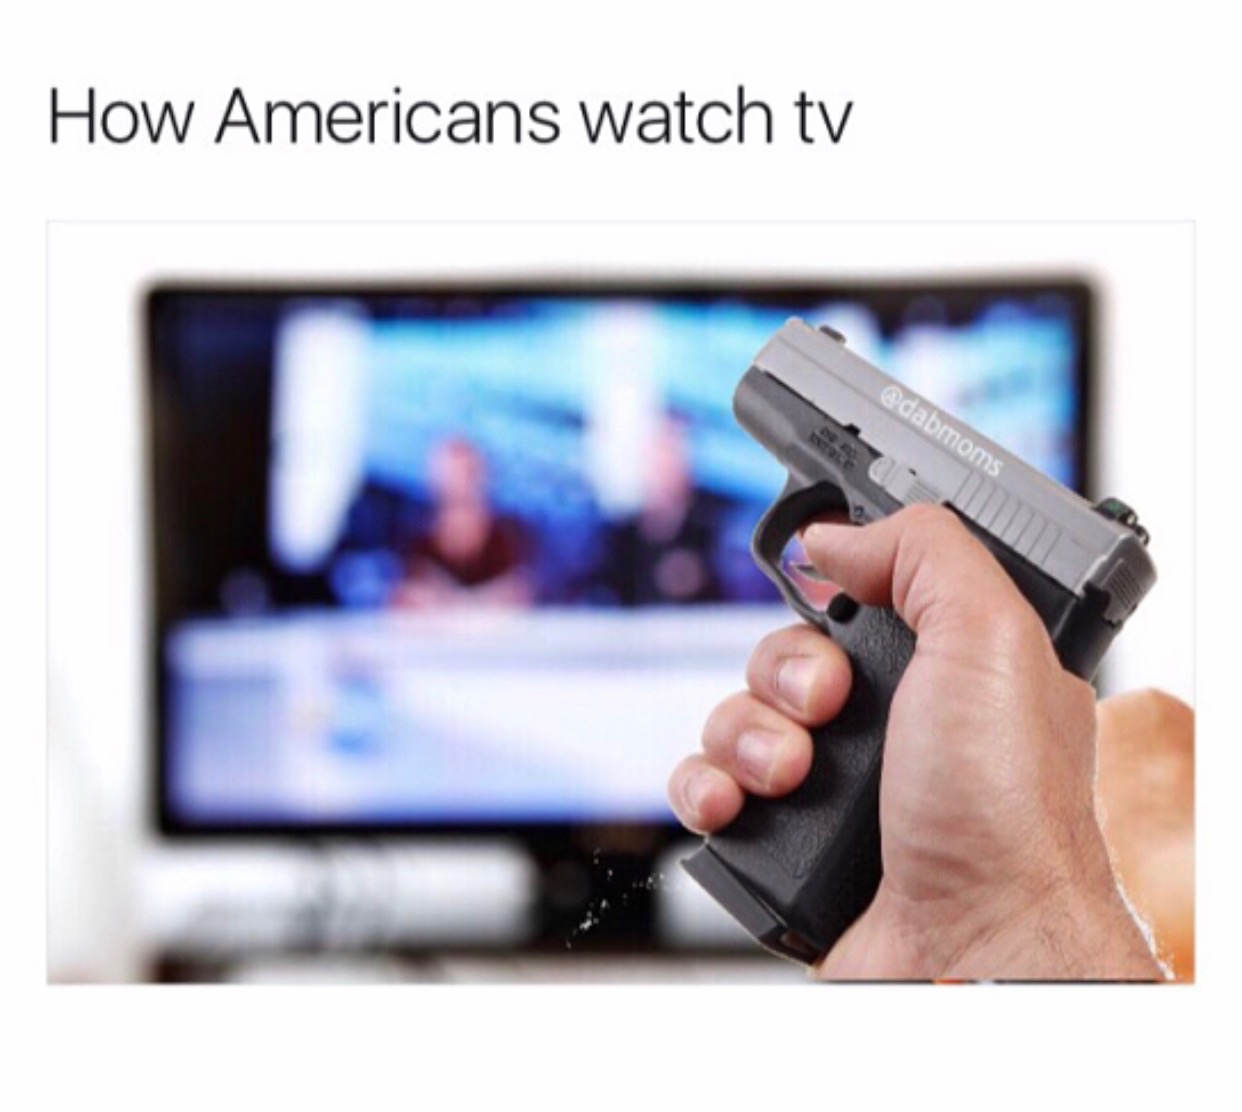 memes - How Americans watch tv dabmoms